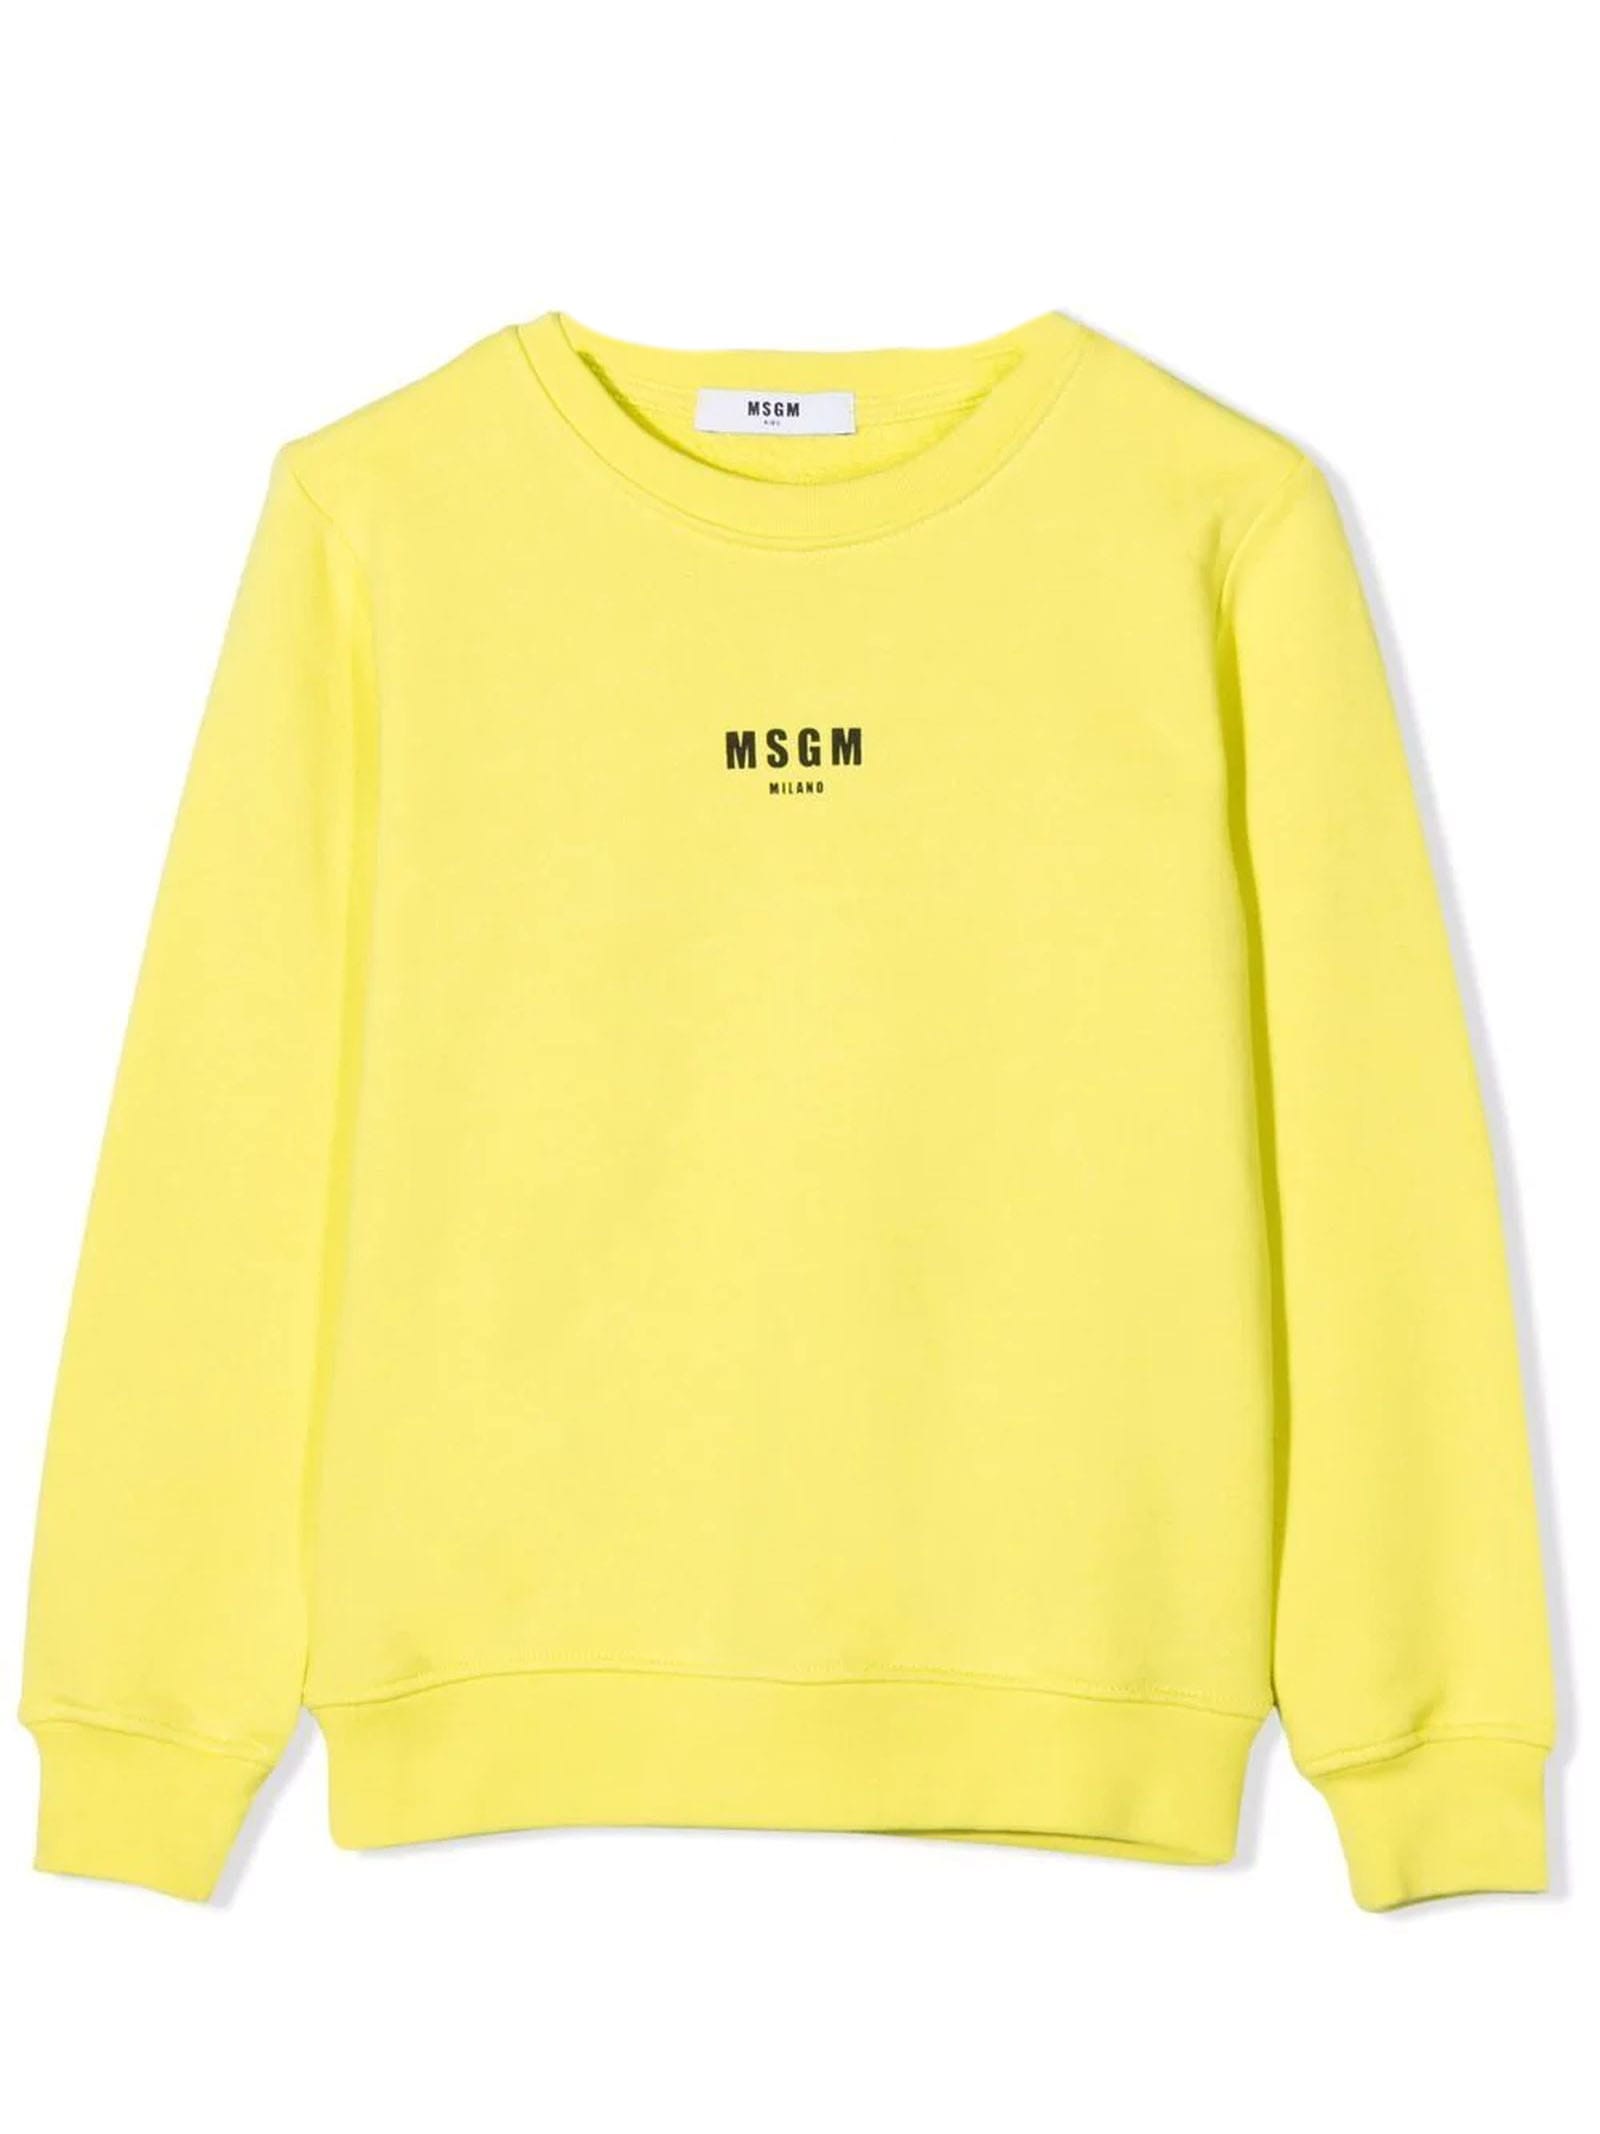 MSGM Yellow Cotton Sweatshirt